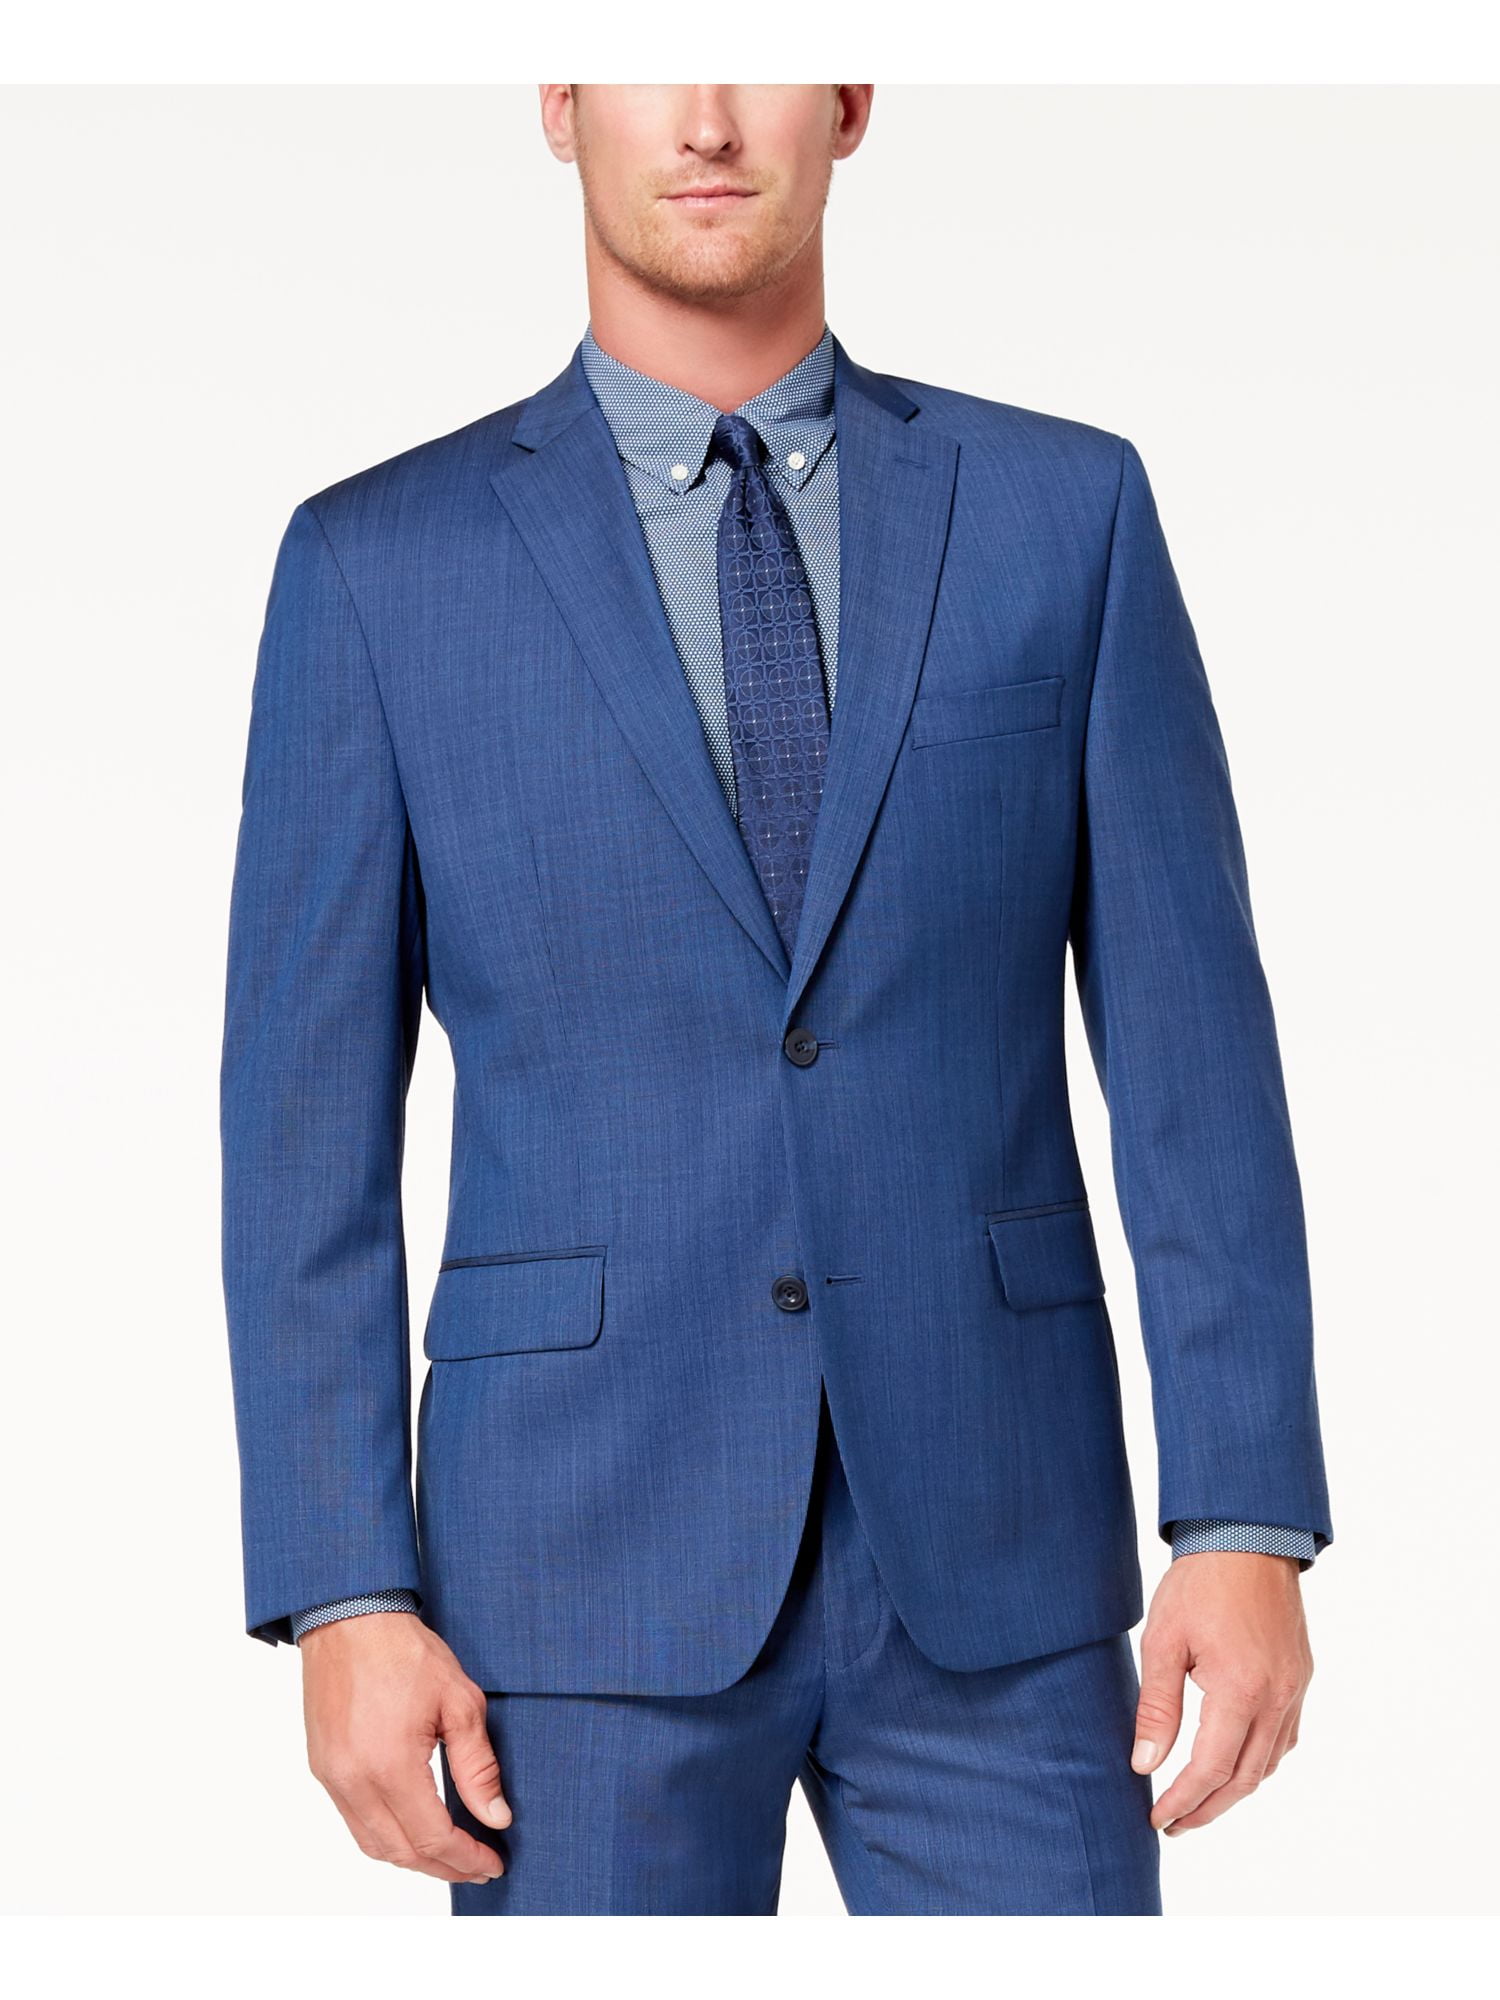 MICHAEL KORS Mens Navy Classic Fit Suit Separate 48 LONG - Walmart.com